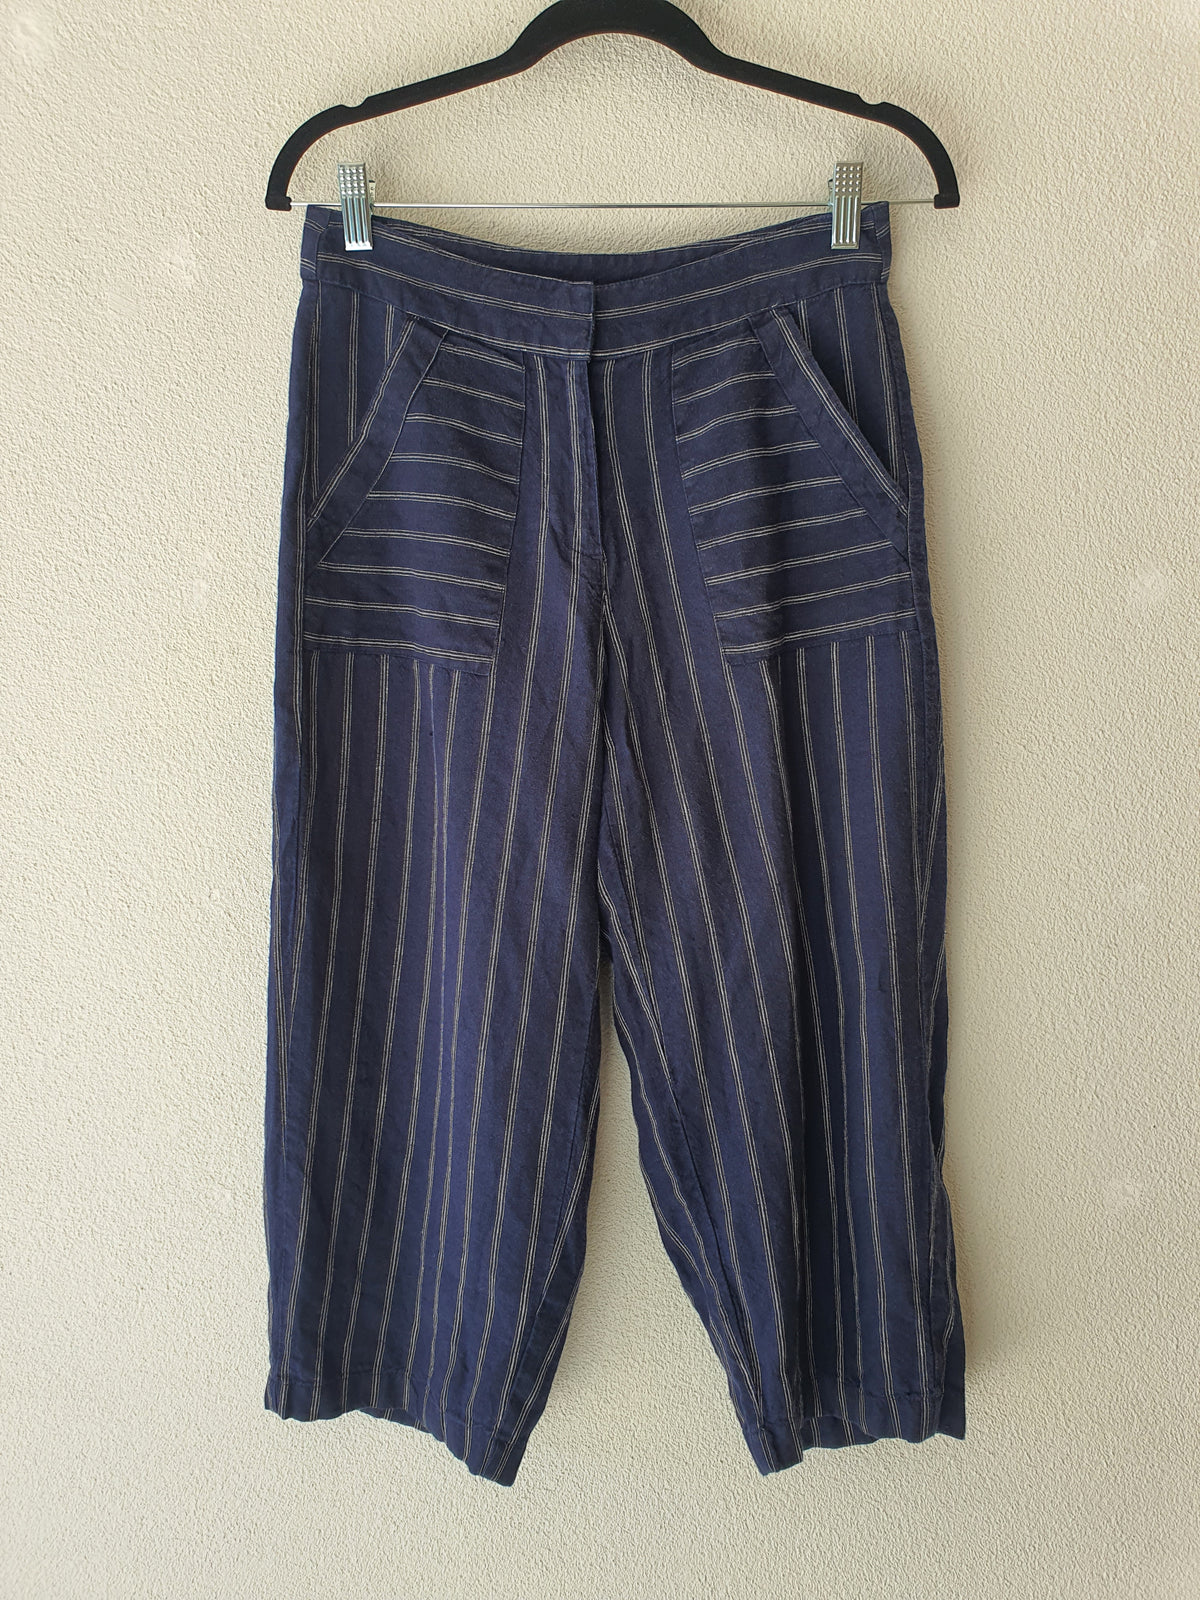 Zest Linen Navy Stripe  cropped pants Pants 8